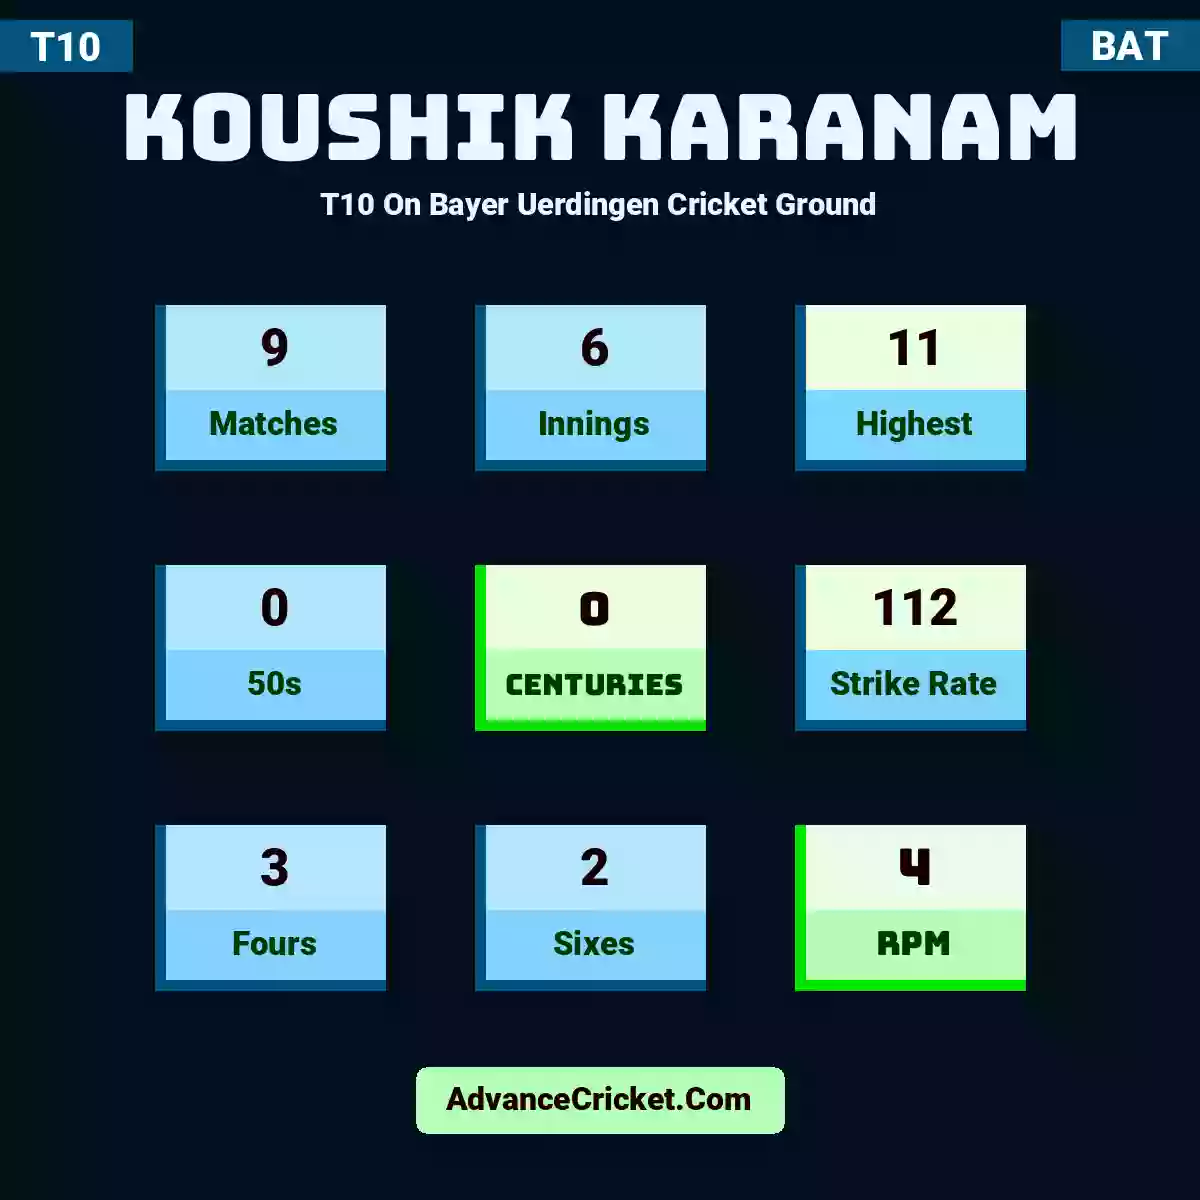 Koushik Karanam T10  On Bayer Uerdingen Cricket Ground, Koushik Karanam played 9 matches, scored 11 runs as highest, 0 half-centuries, and 0 centuries, with a strike rate of 112. K.Karanam hit 3 fours and 2 sixes, with an RPM of 4.